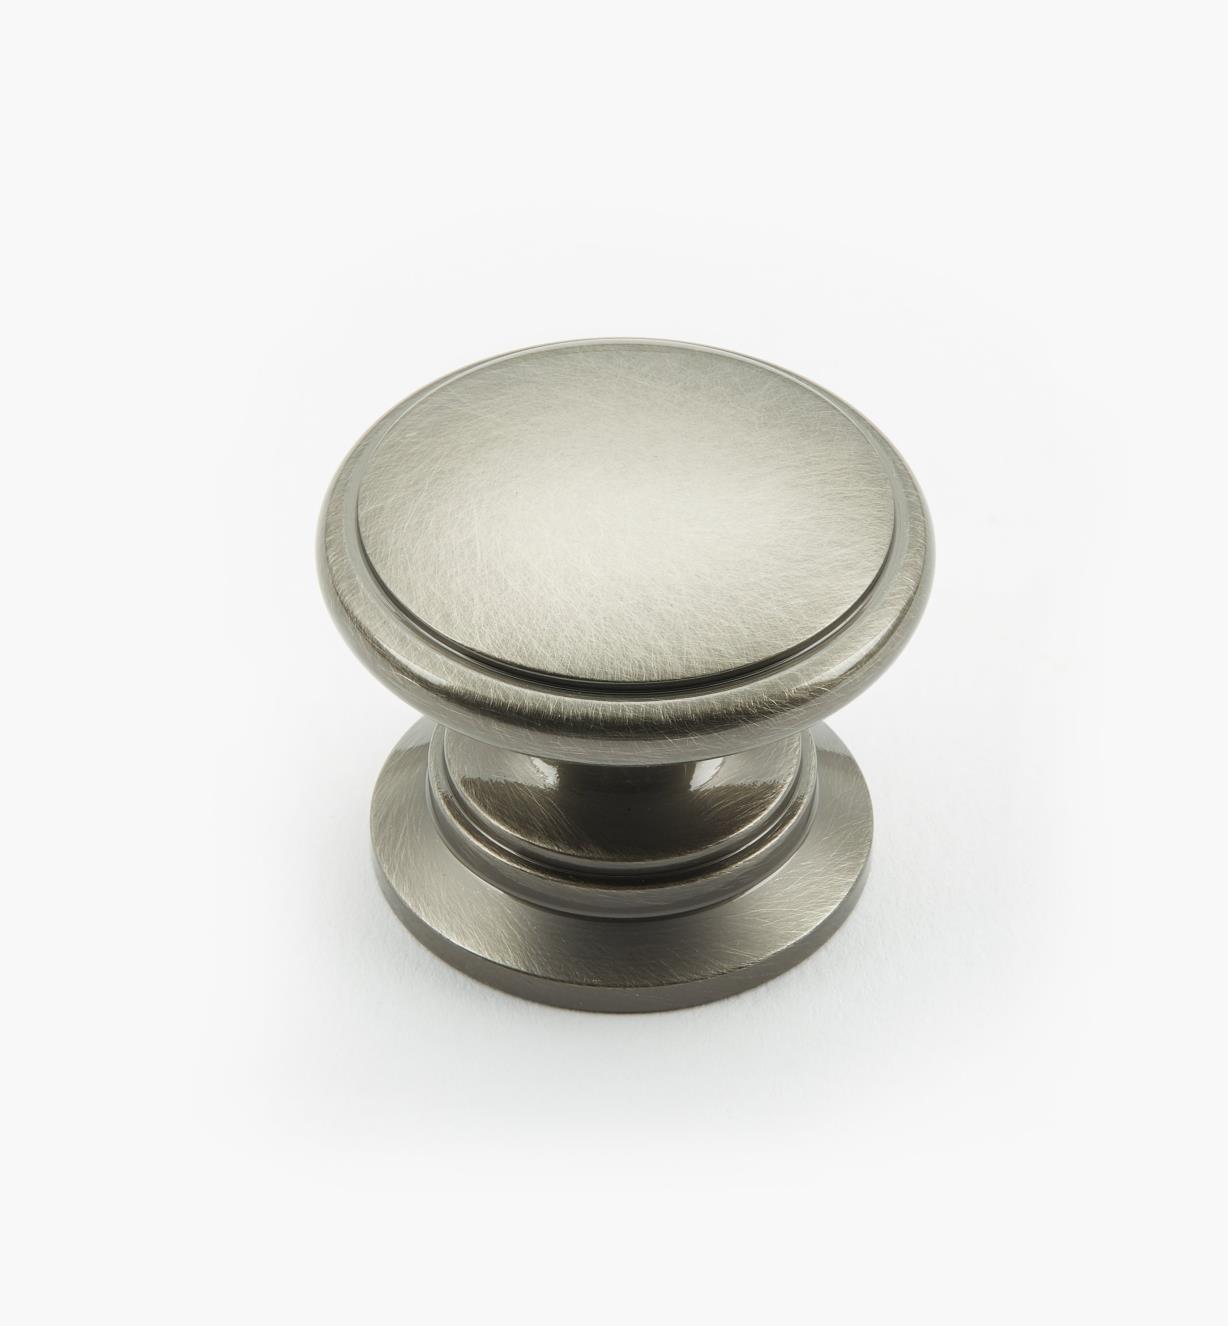 02W3042 - Bouton rond de 1 1/4 po x 1 po,série Nickel antique, laiton